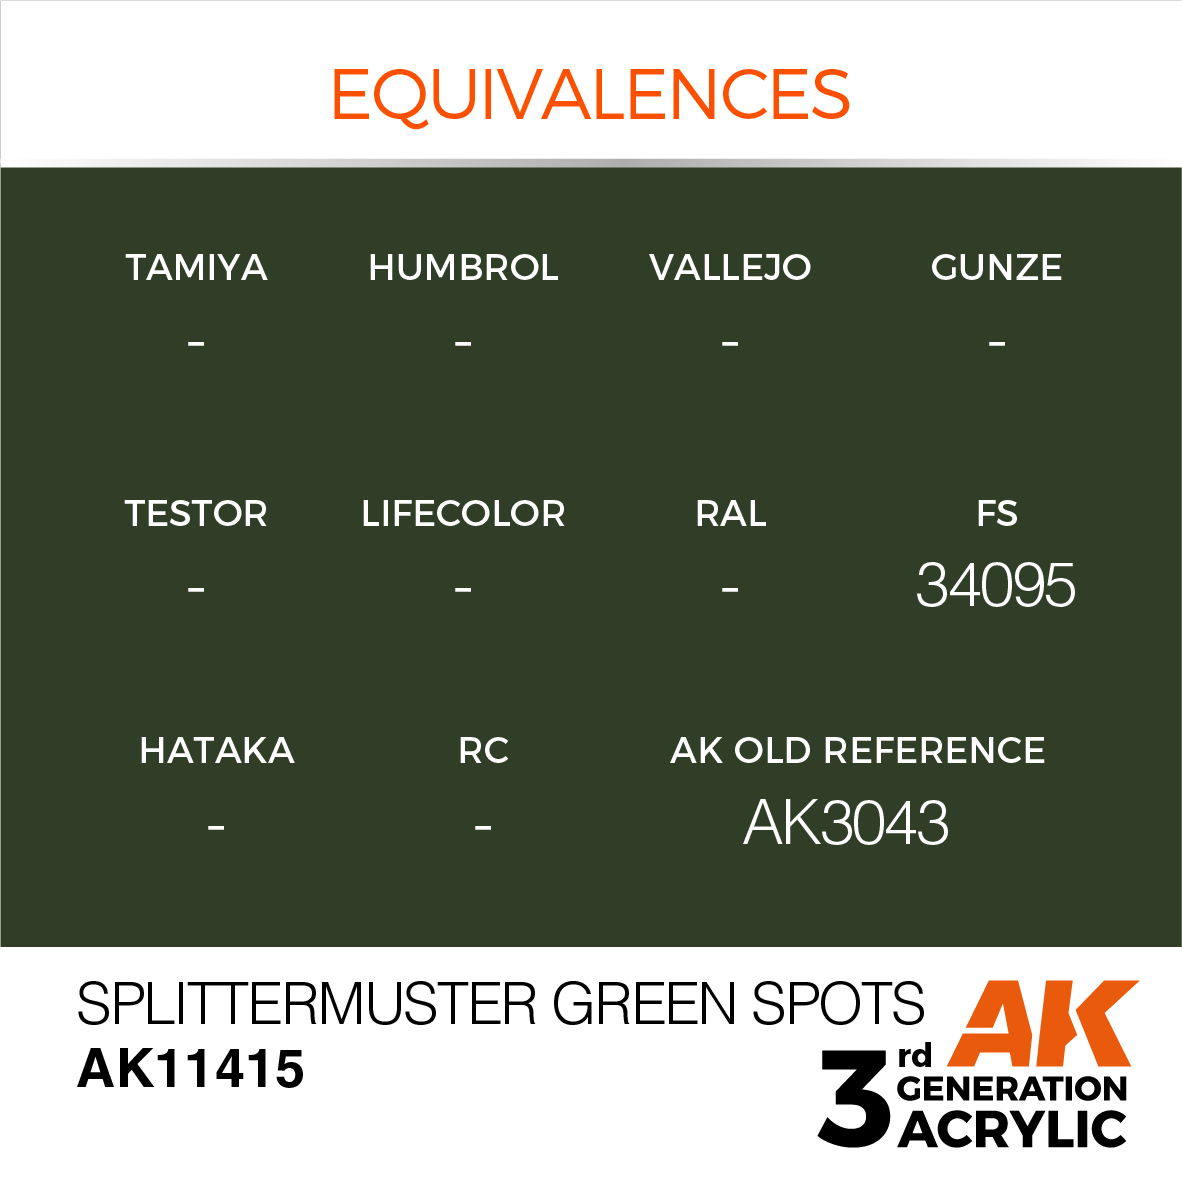 Splittermuster Green Spots – Figures